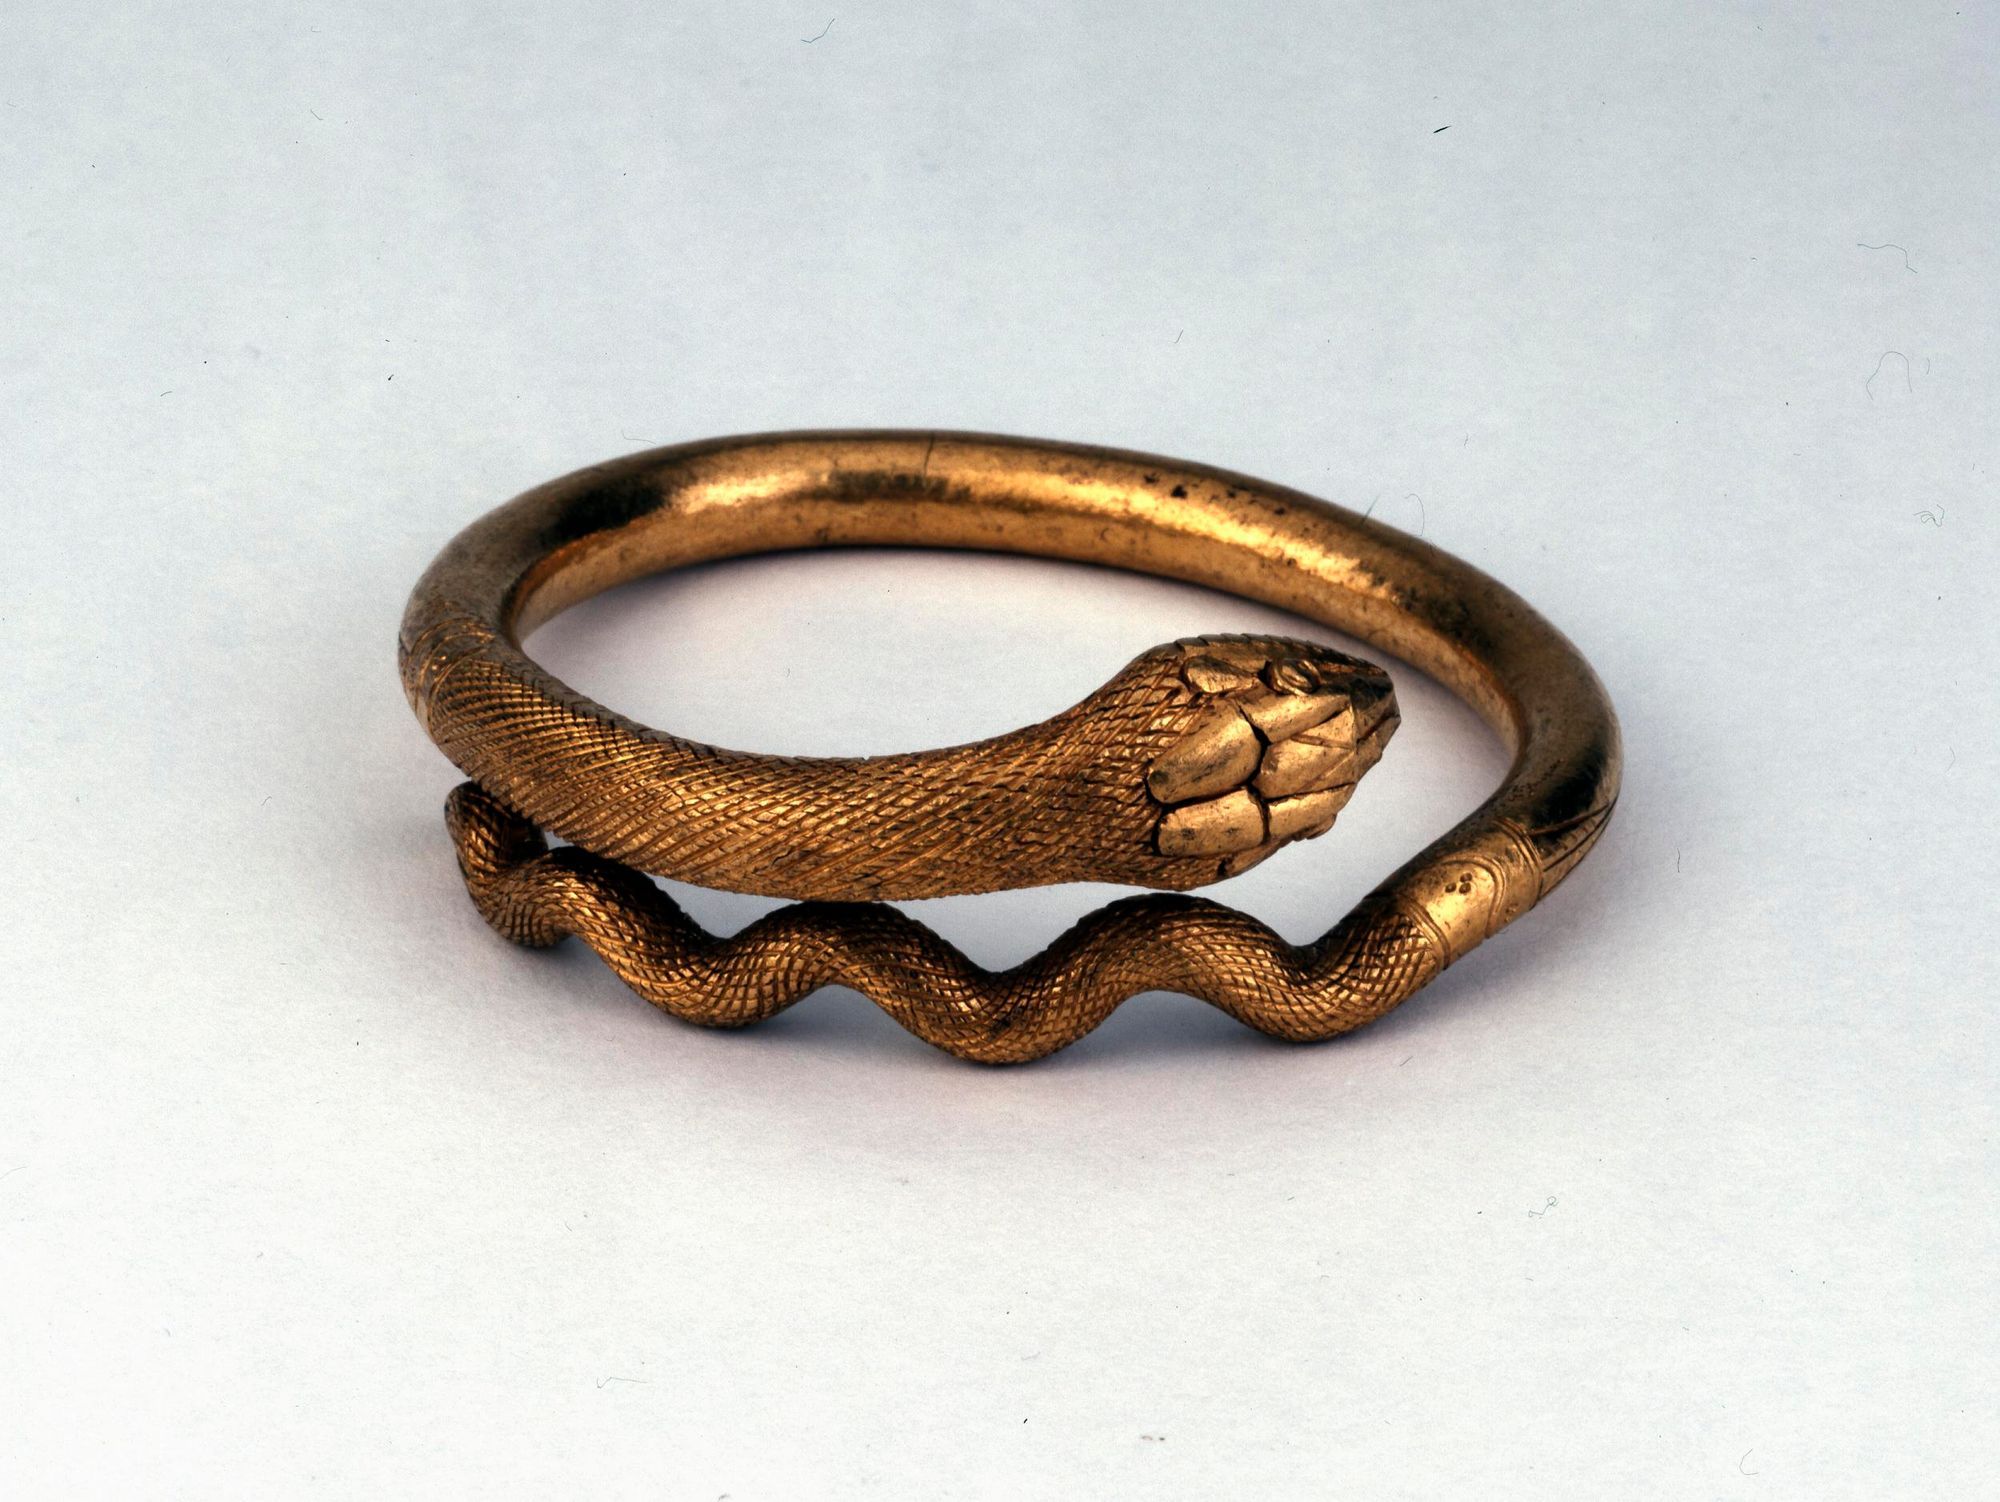 gold snake bracelet found at Pompeii, British Museum